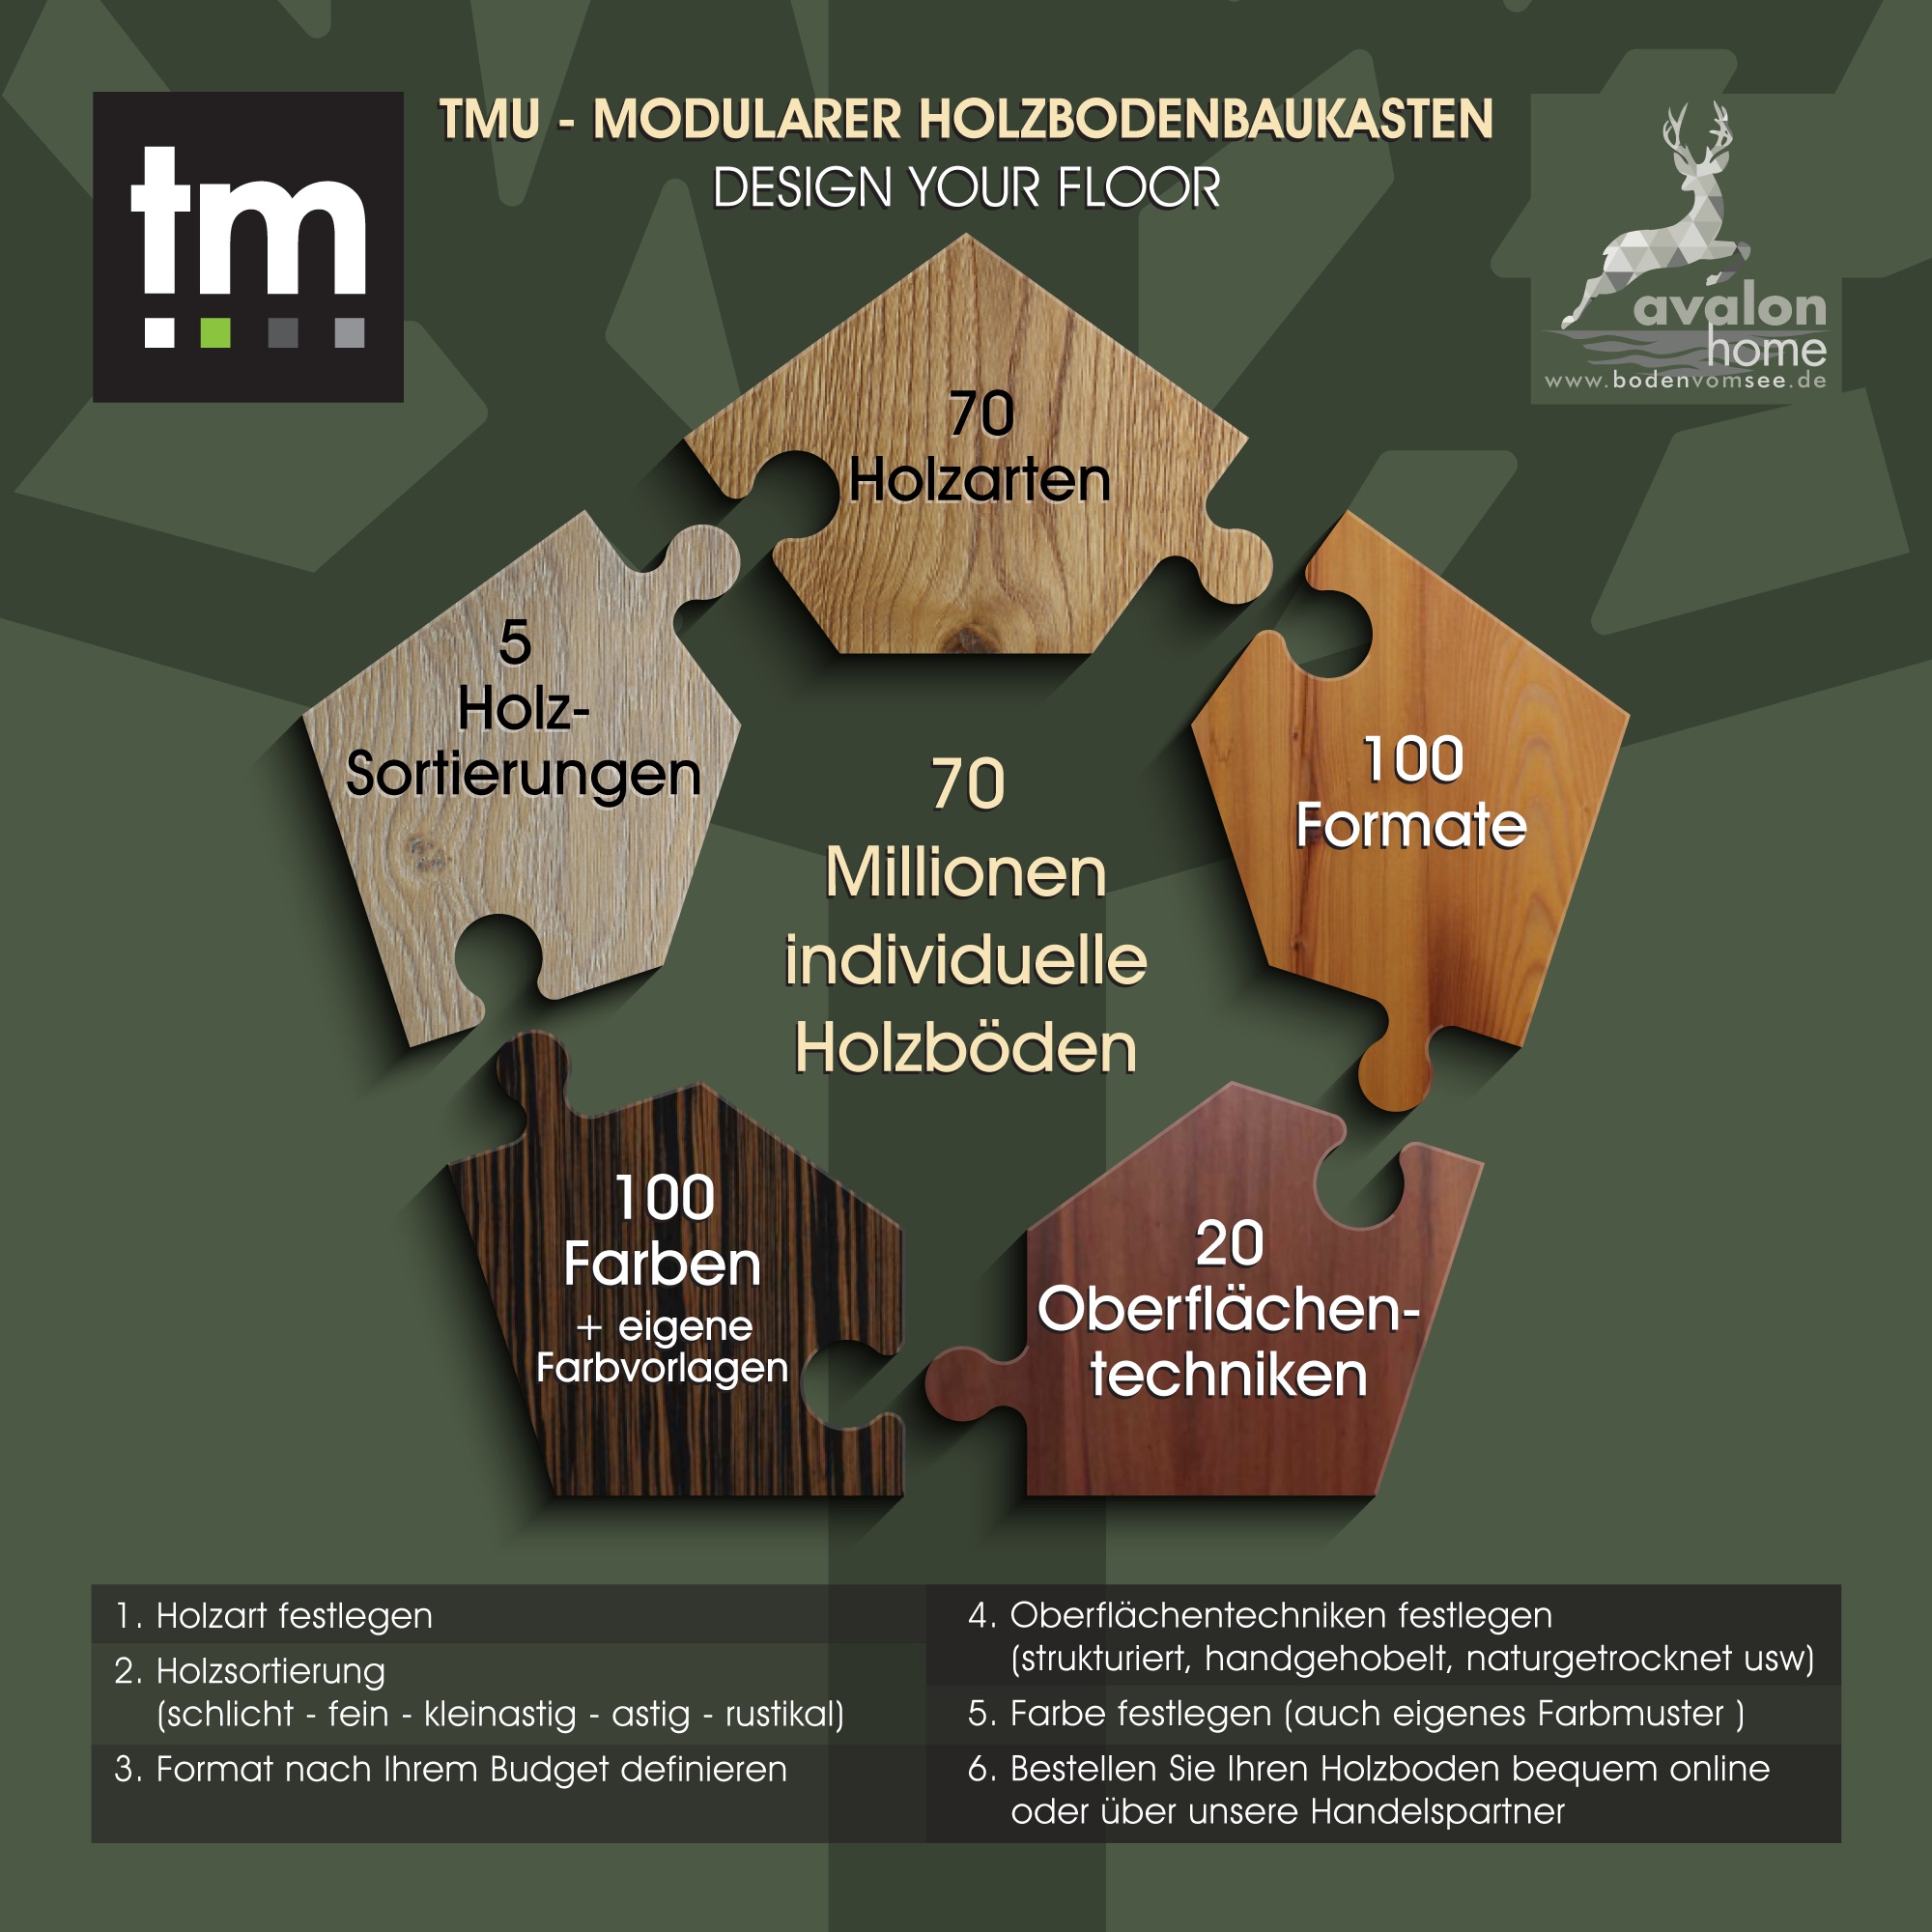 TMU Modularer Holzbodenbaukasten